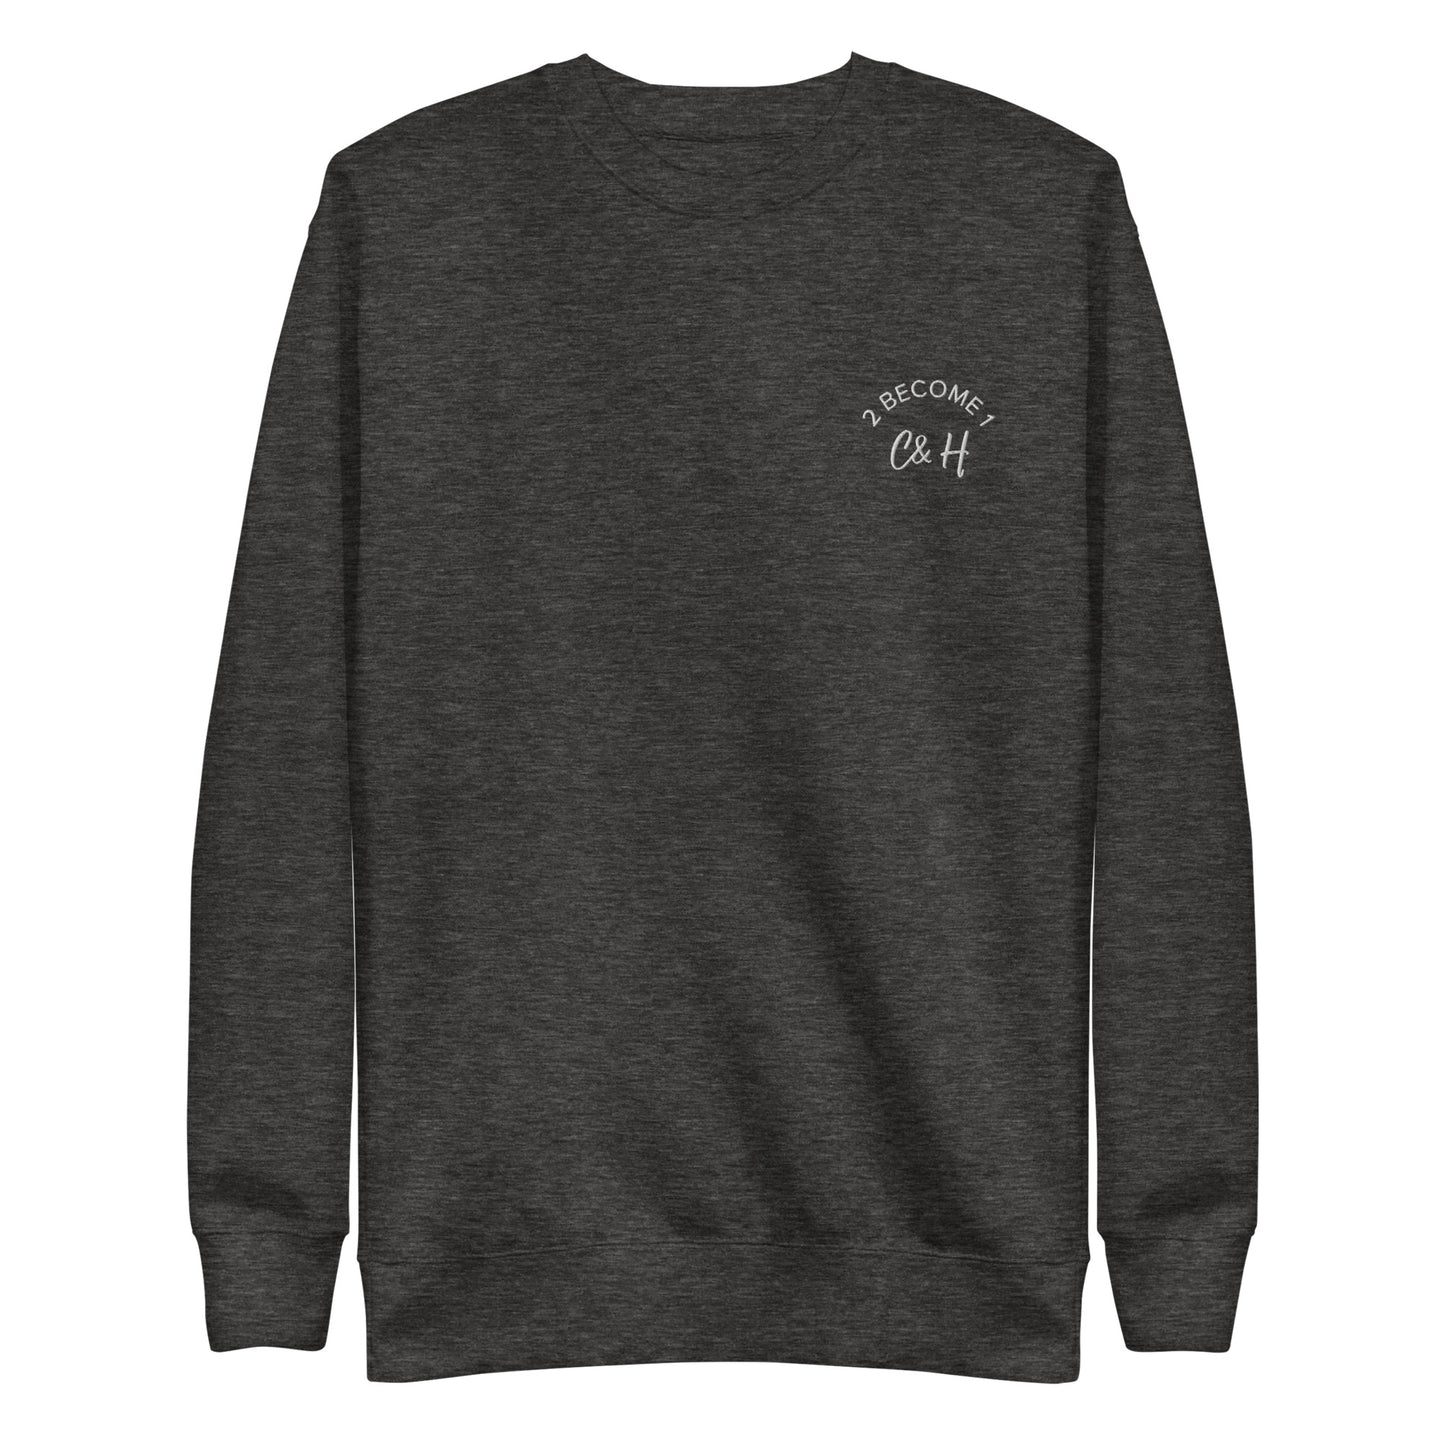 Personalized Sweatshirt 2 become 1